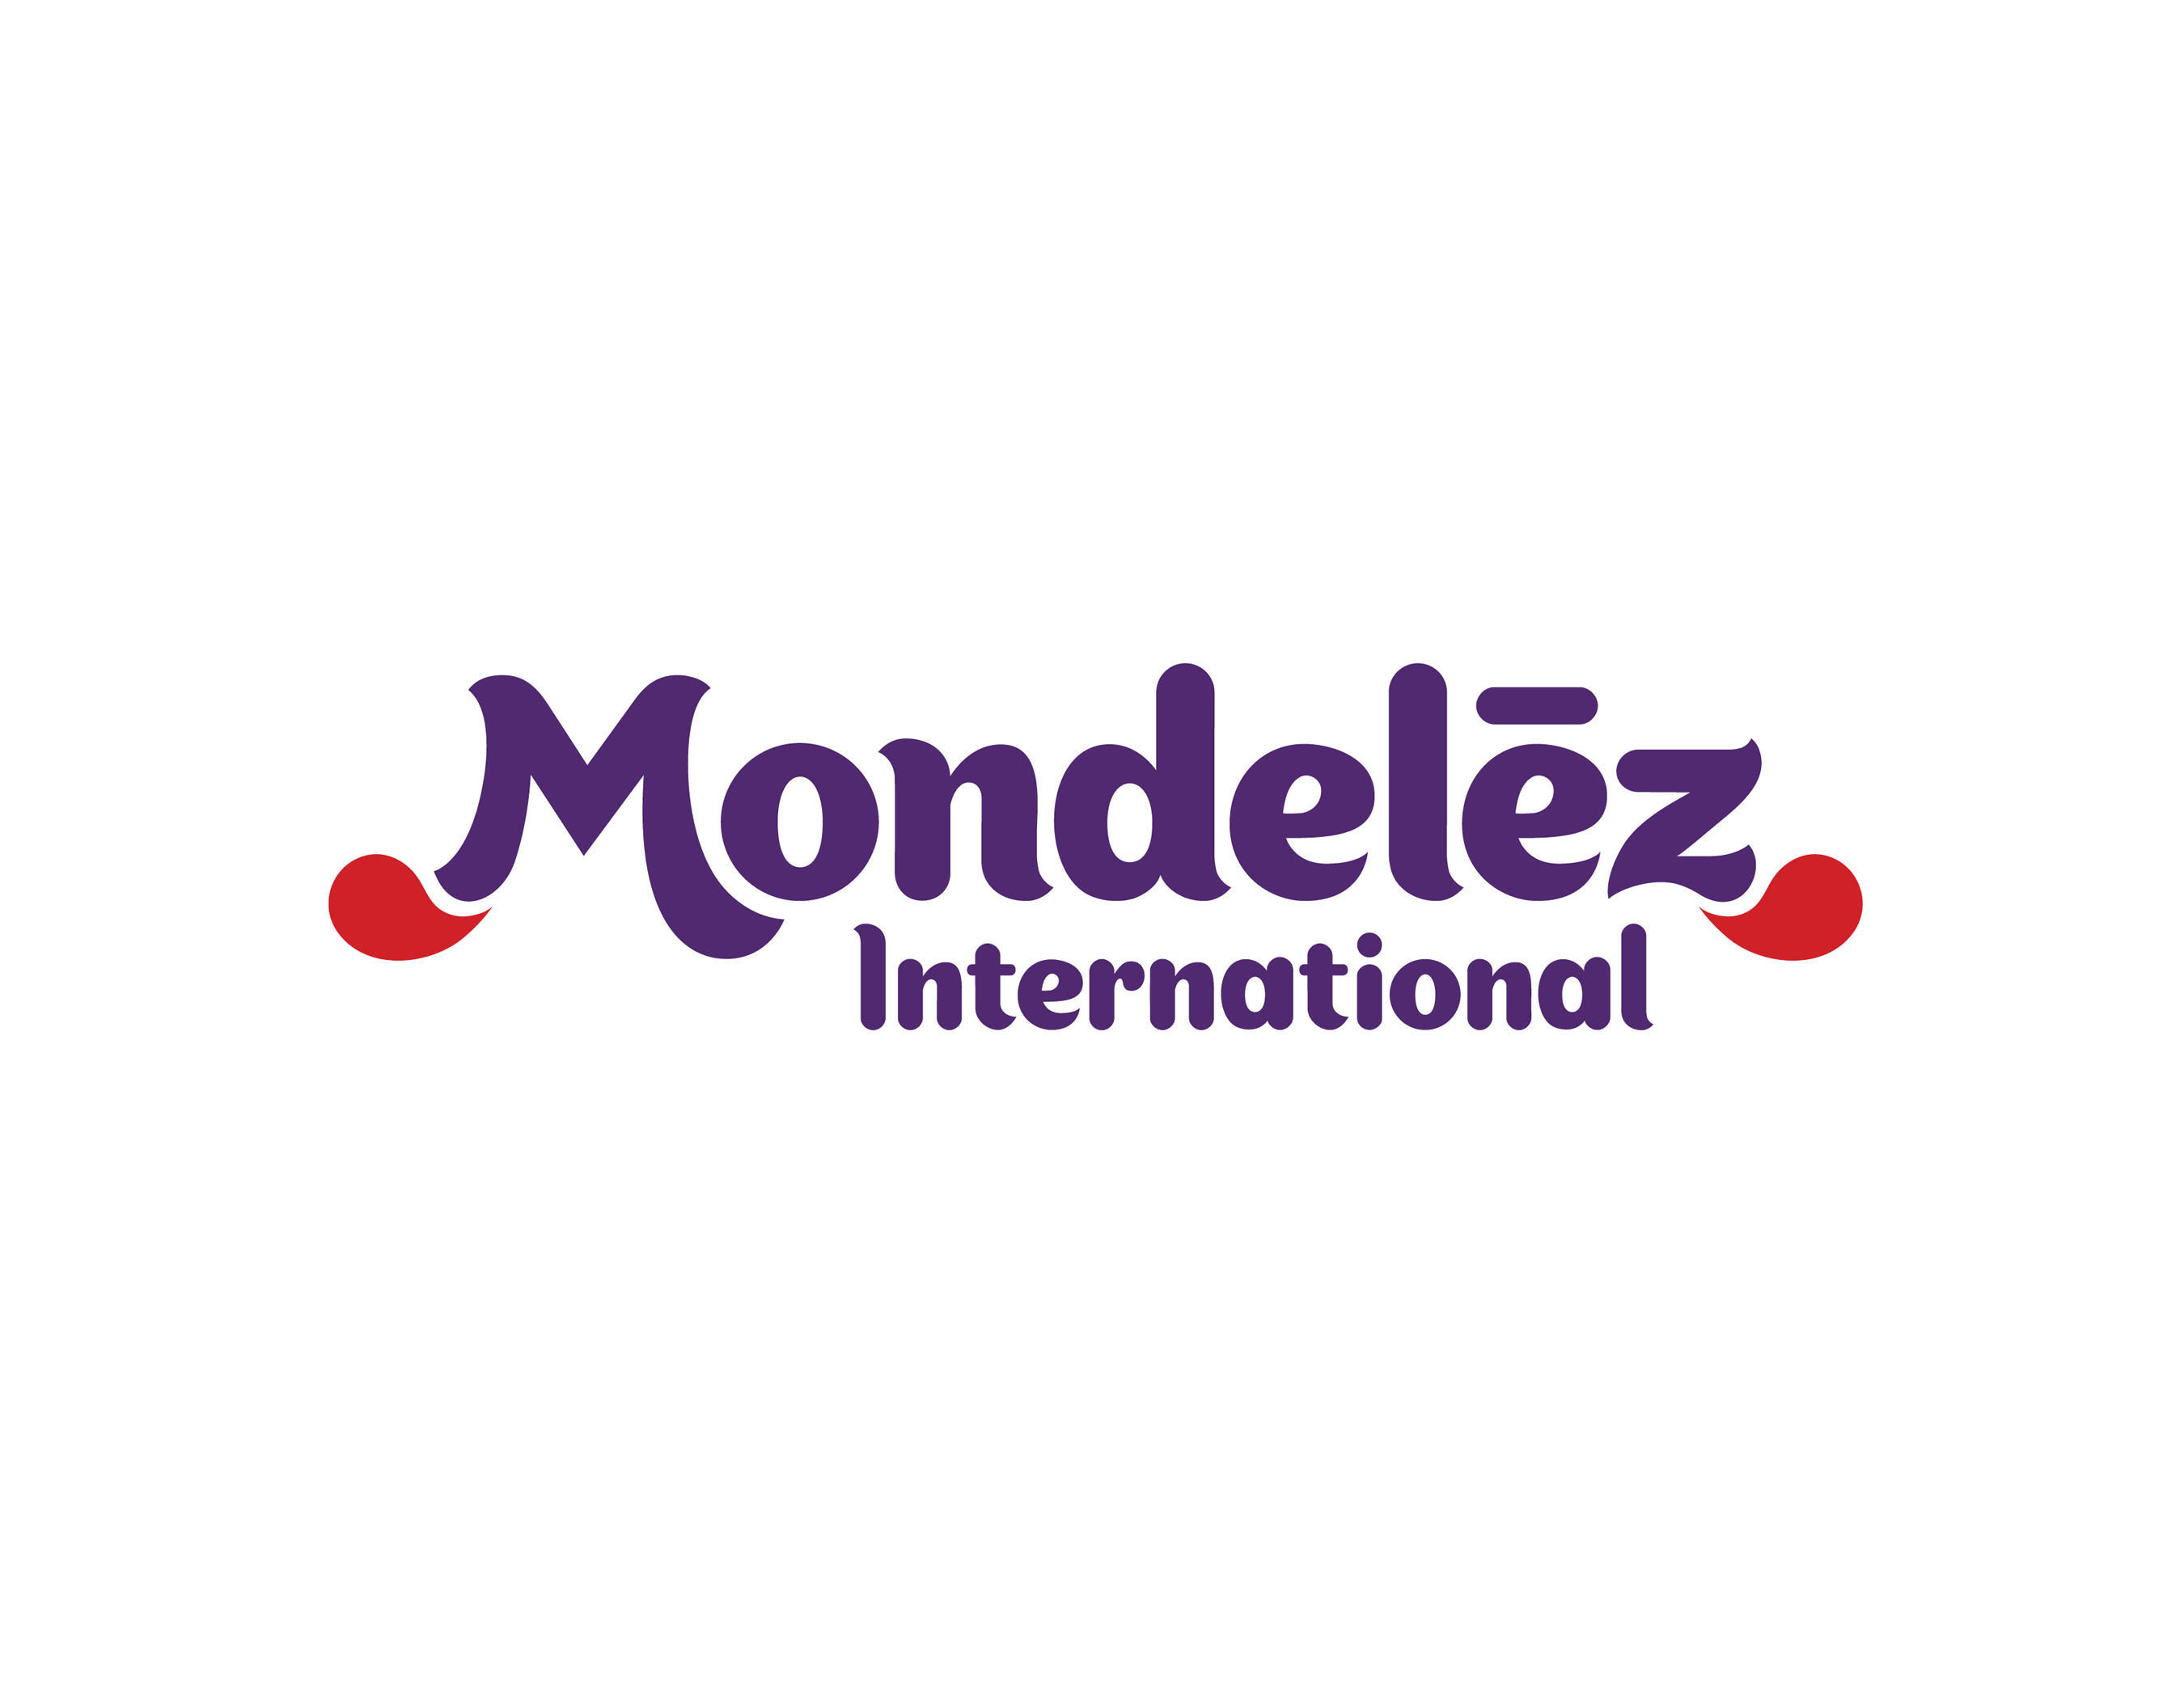 Mondelez International, Inc. (PRNewsFoto/Mondelez International, Inc.) (PRNewsFoto/)